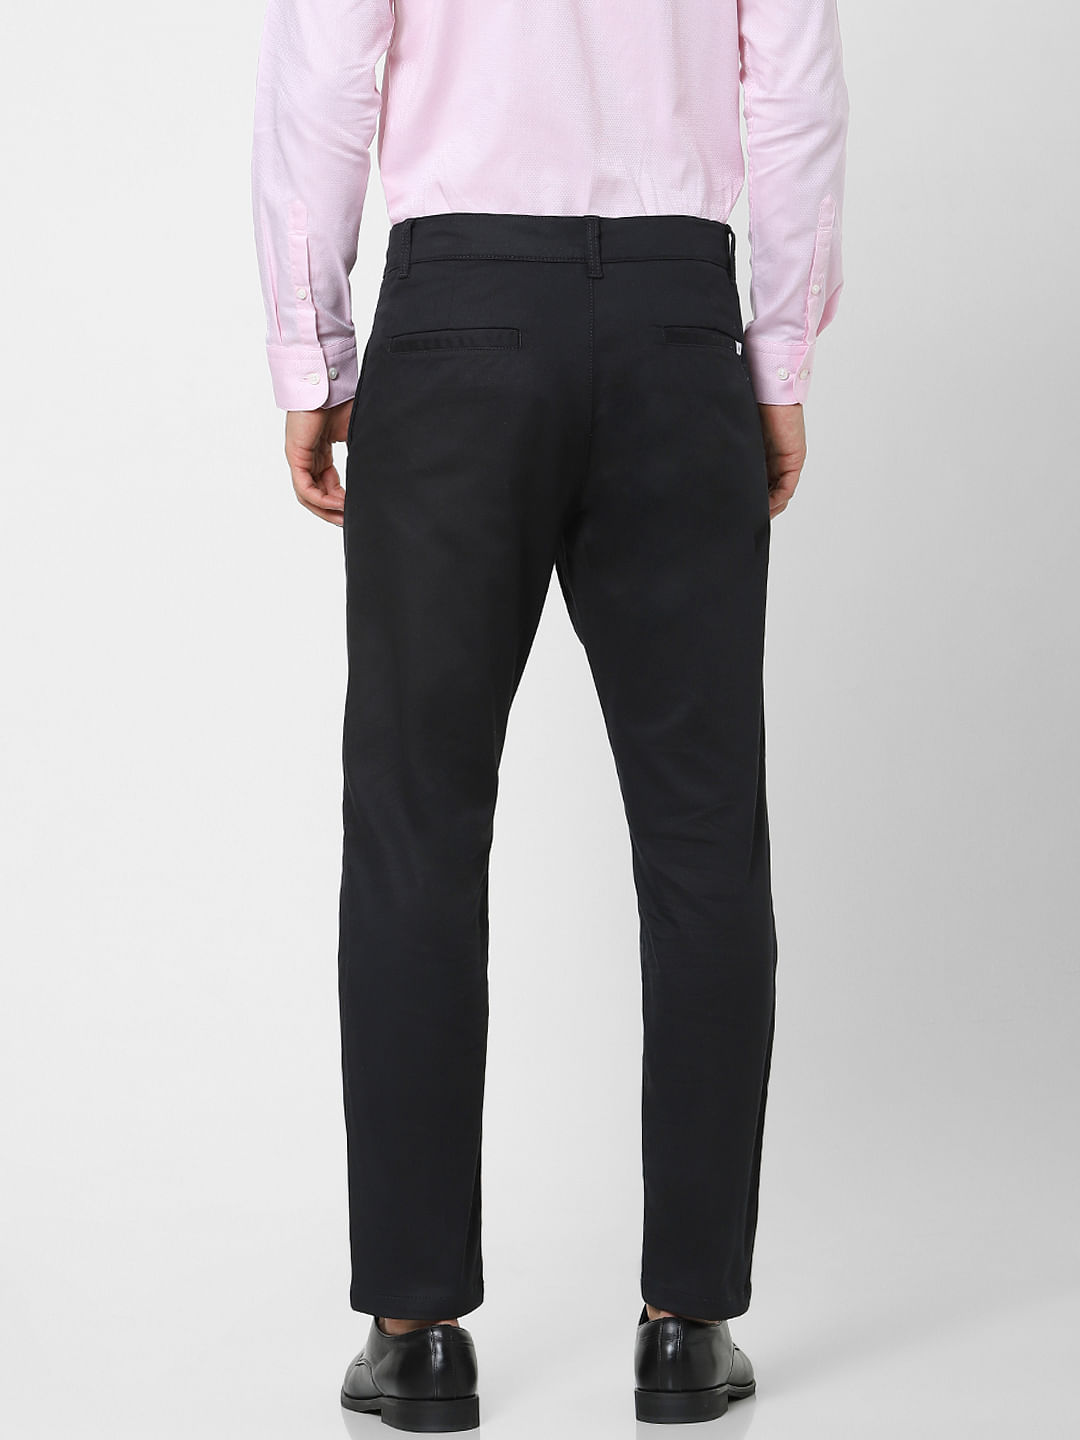 Plaid&Plain Plaid&Plain Men's Skinny Stretchy Khaki Pants India | Ubuy